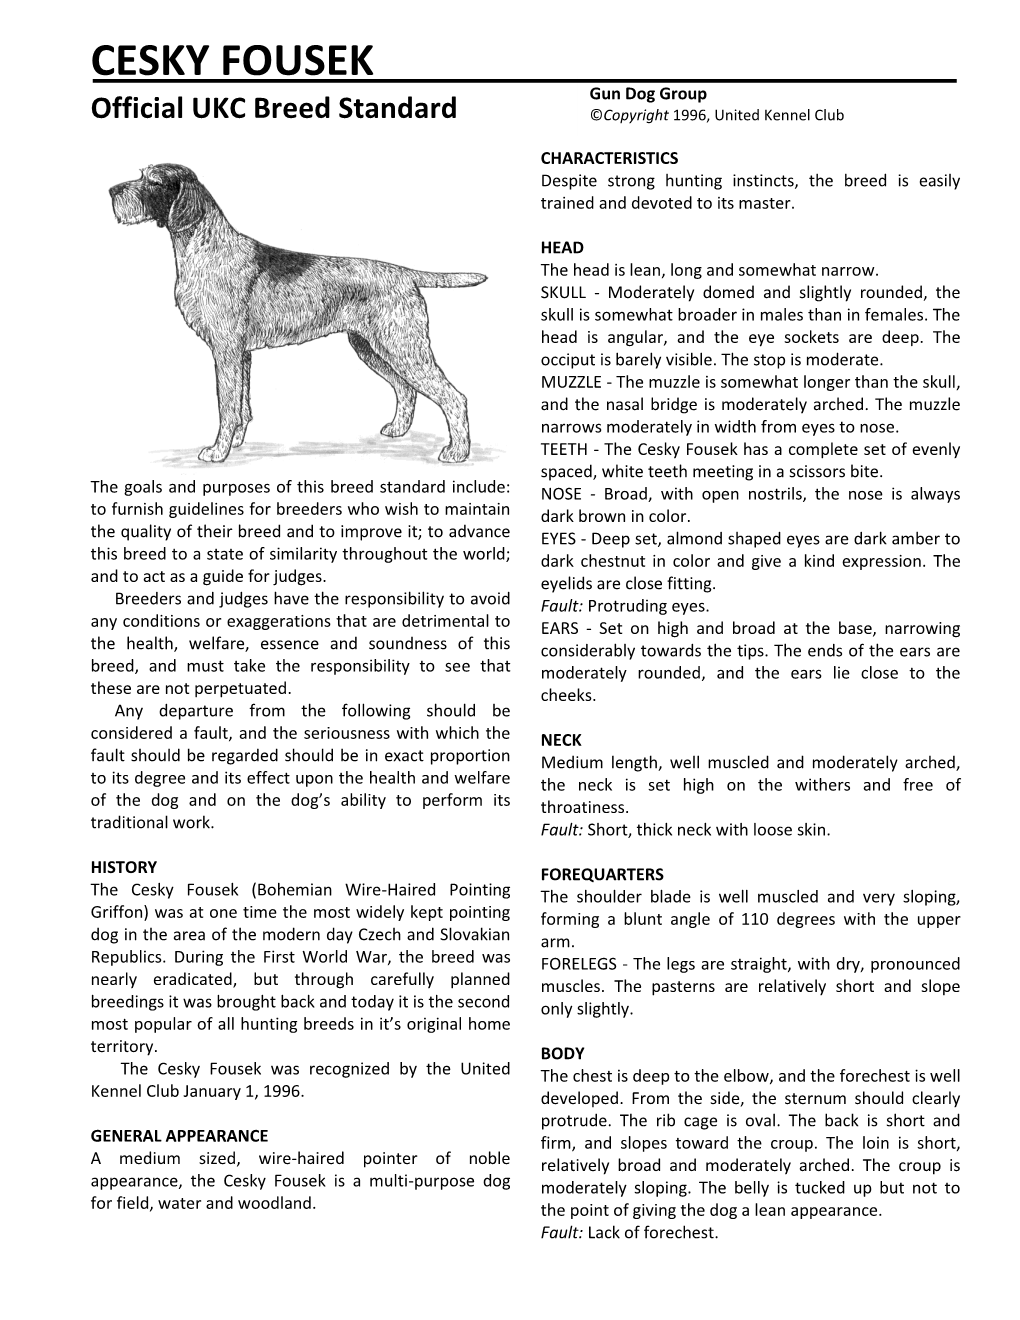 CESKY FOUSEK Gun Dog Group Official UKC Breed Standard ©Copyright 1996, United Kennel Club